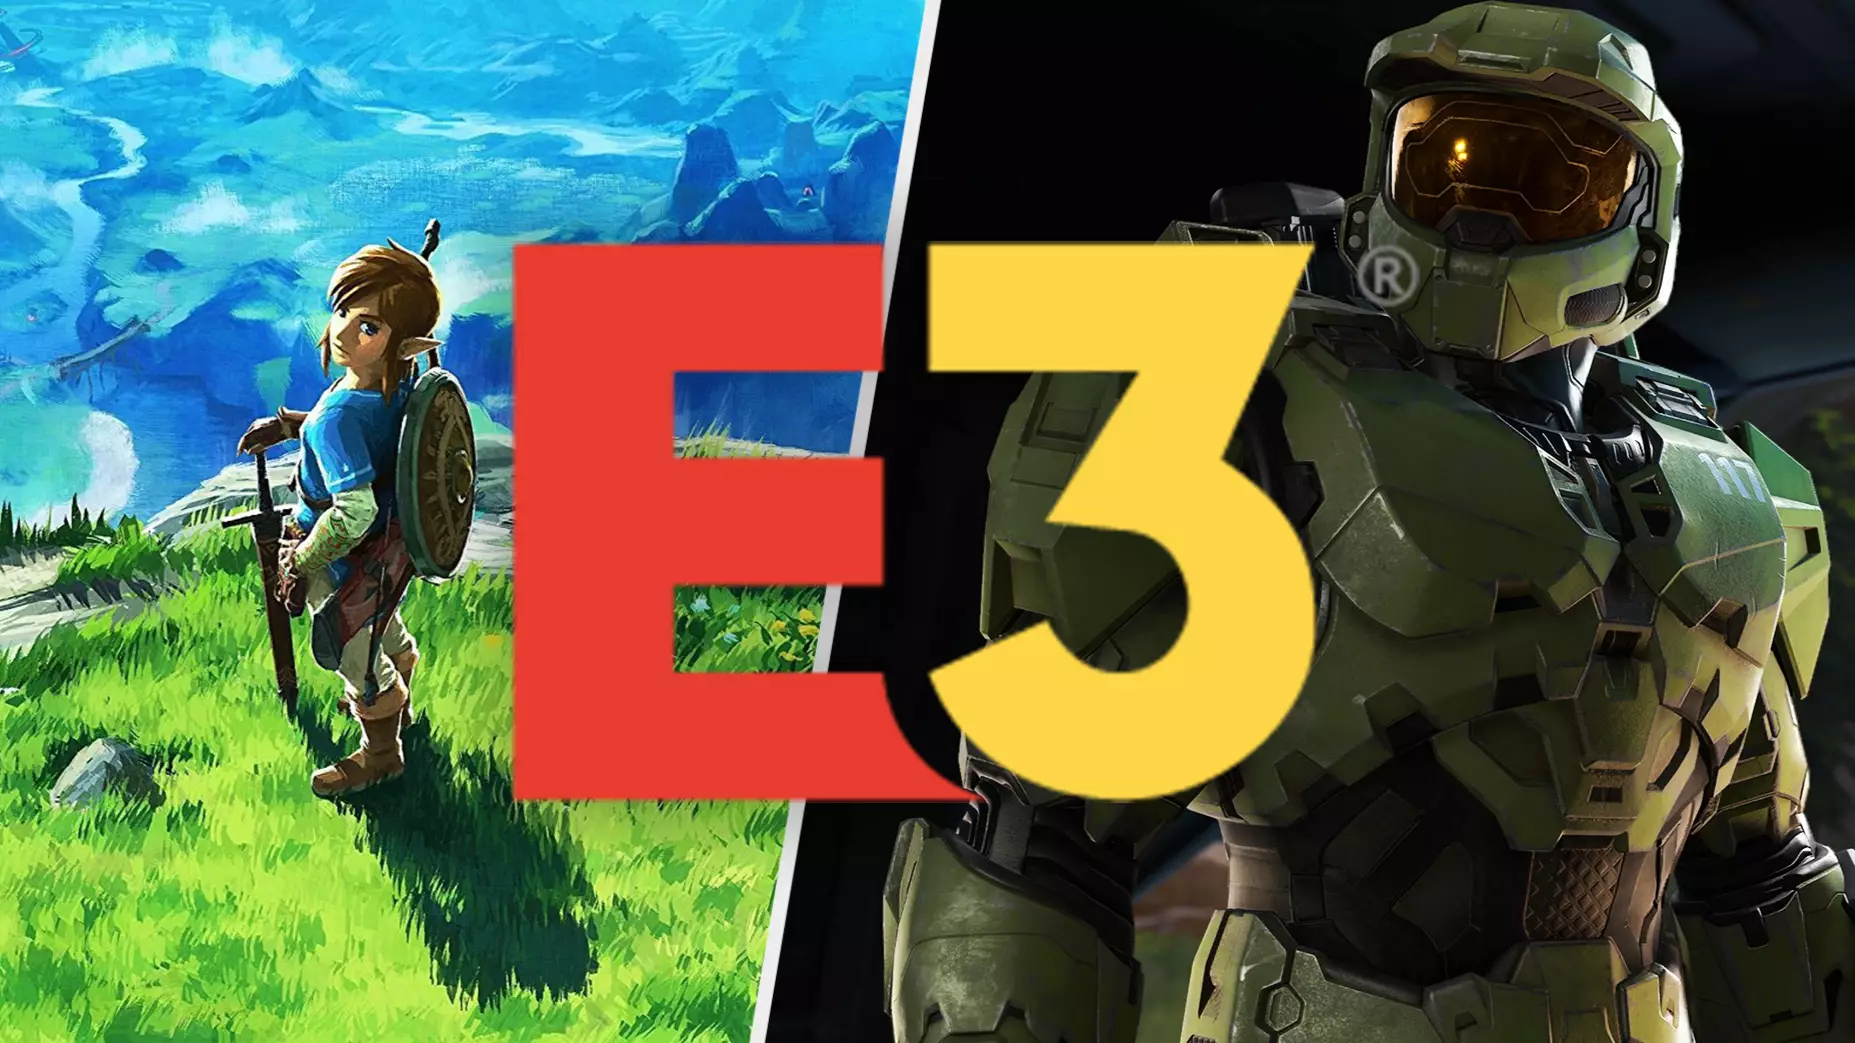 Nintendo Records Highest Peak Viewership, 'Wins E3' Ahead Of Xbox